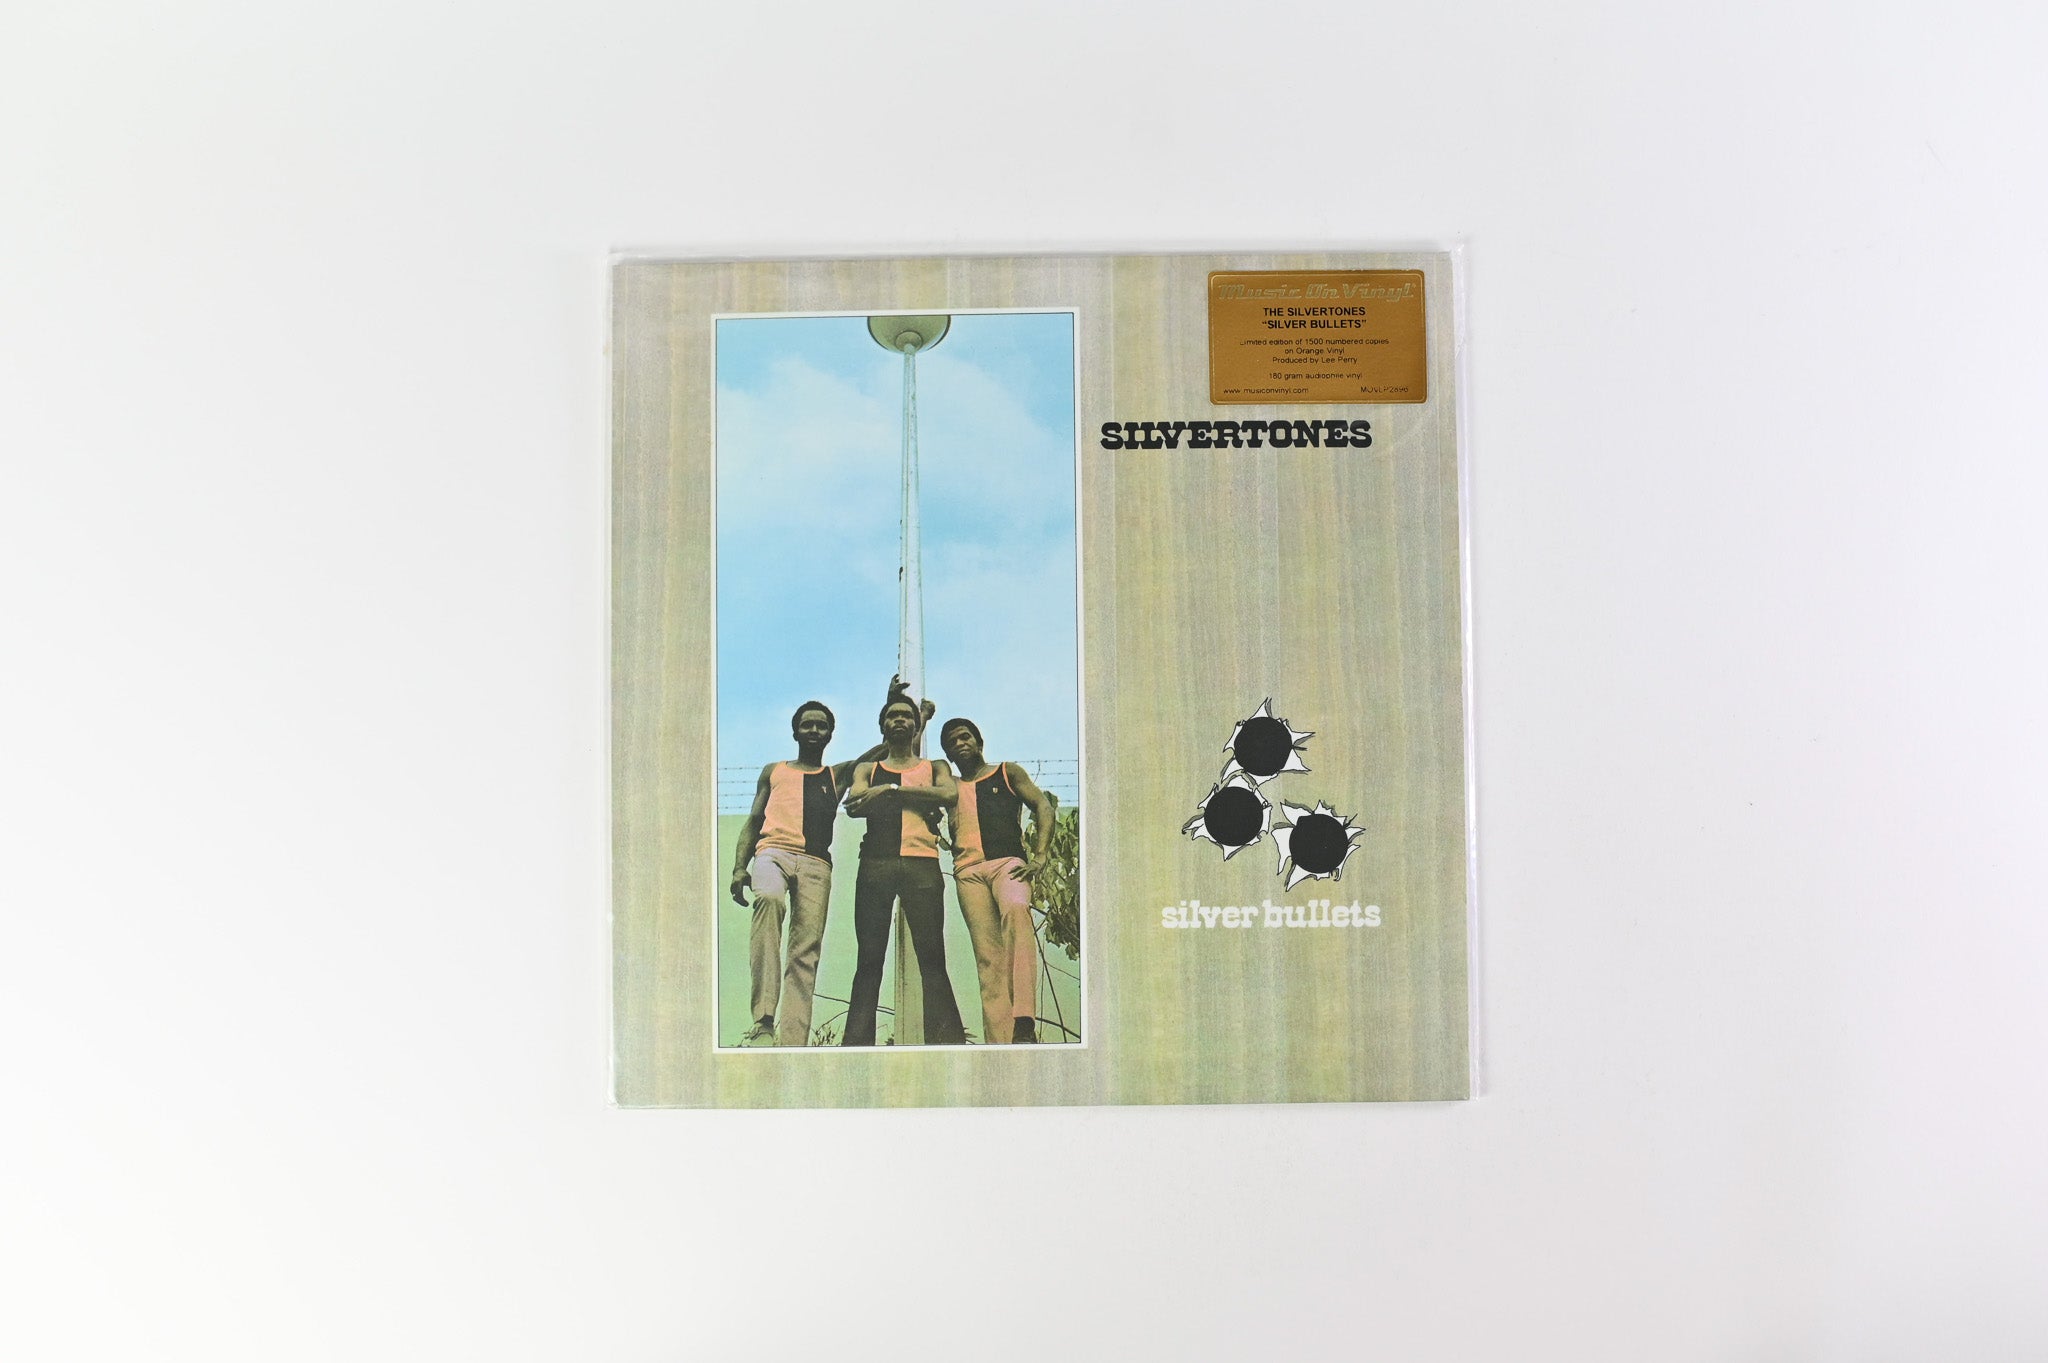 The Silvertones - Silver Bullets Music on Vinyl Ltd Numbered Orange Vinyl Reissue